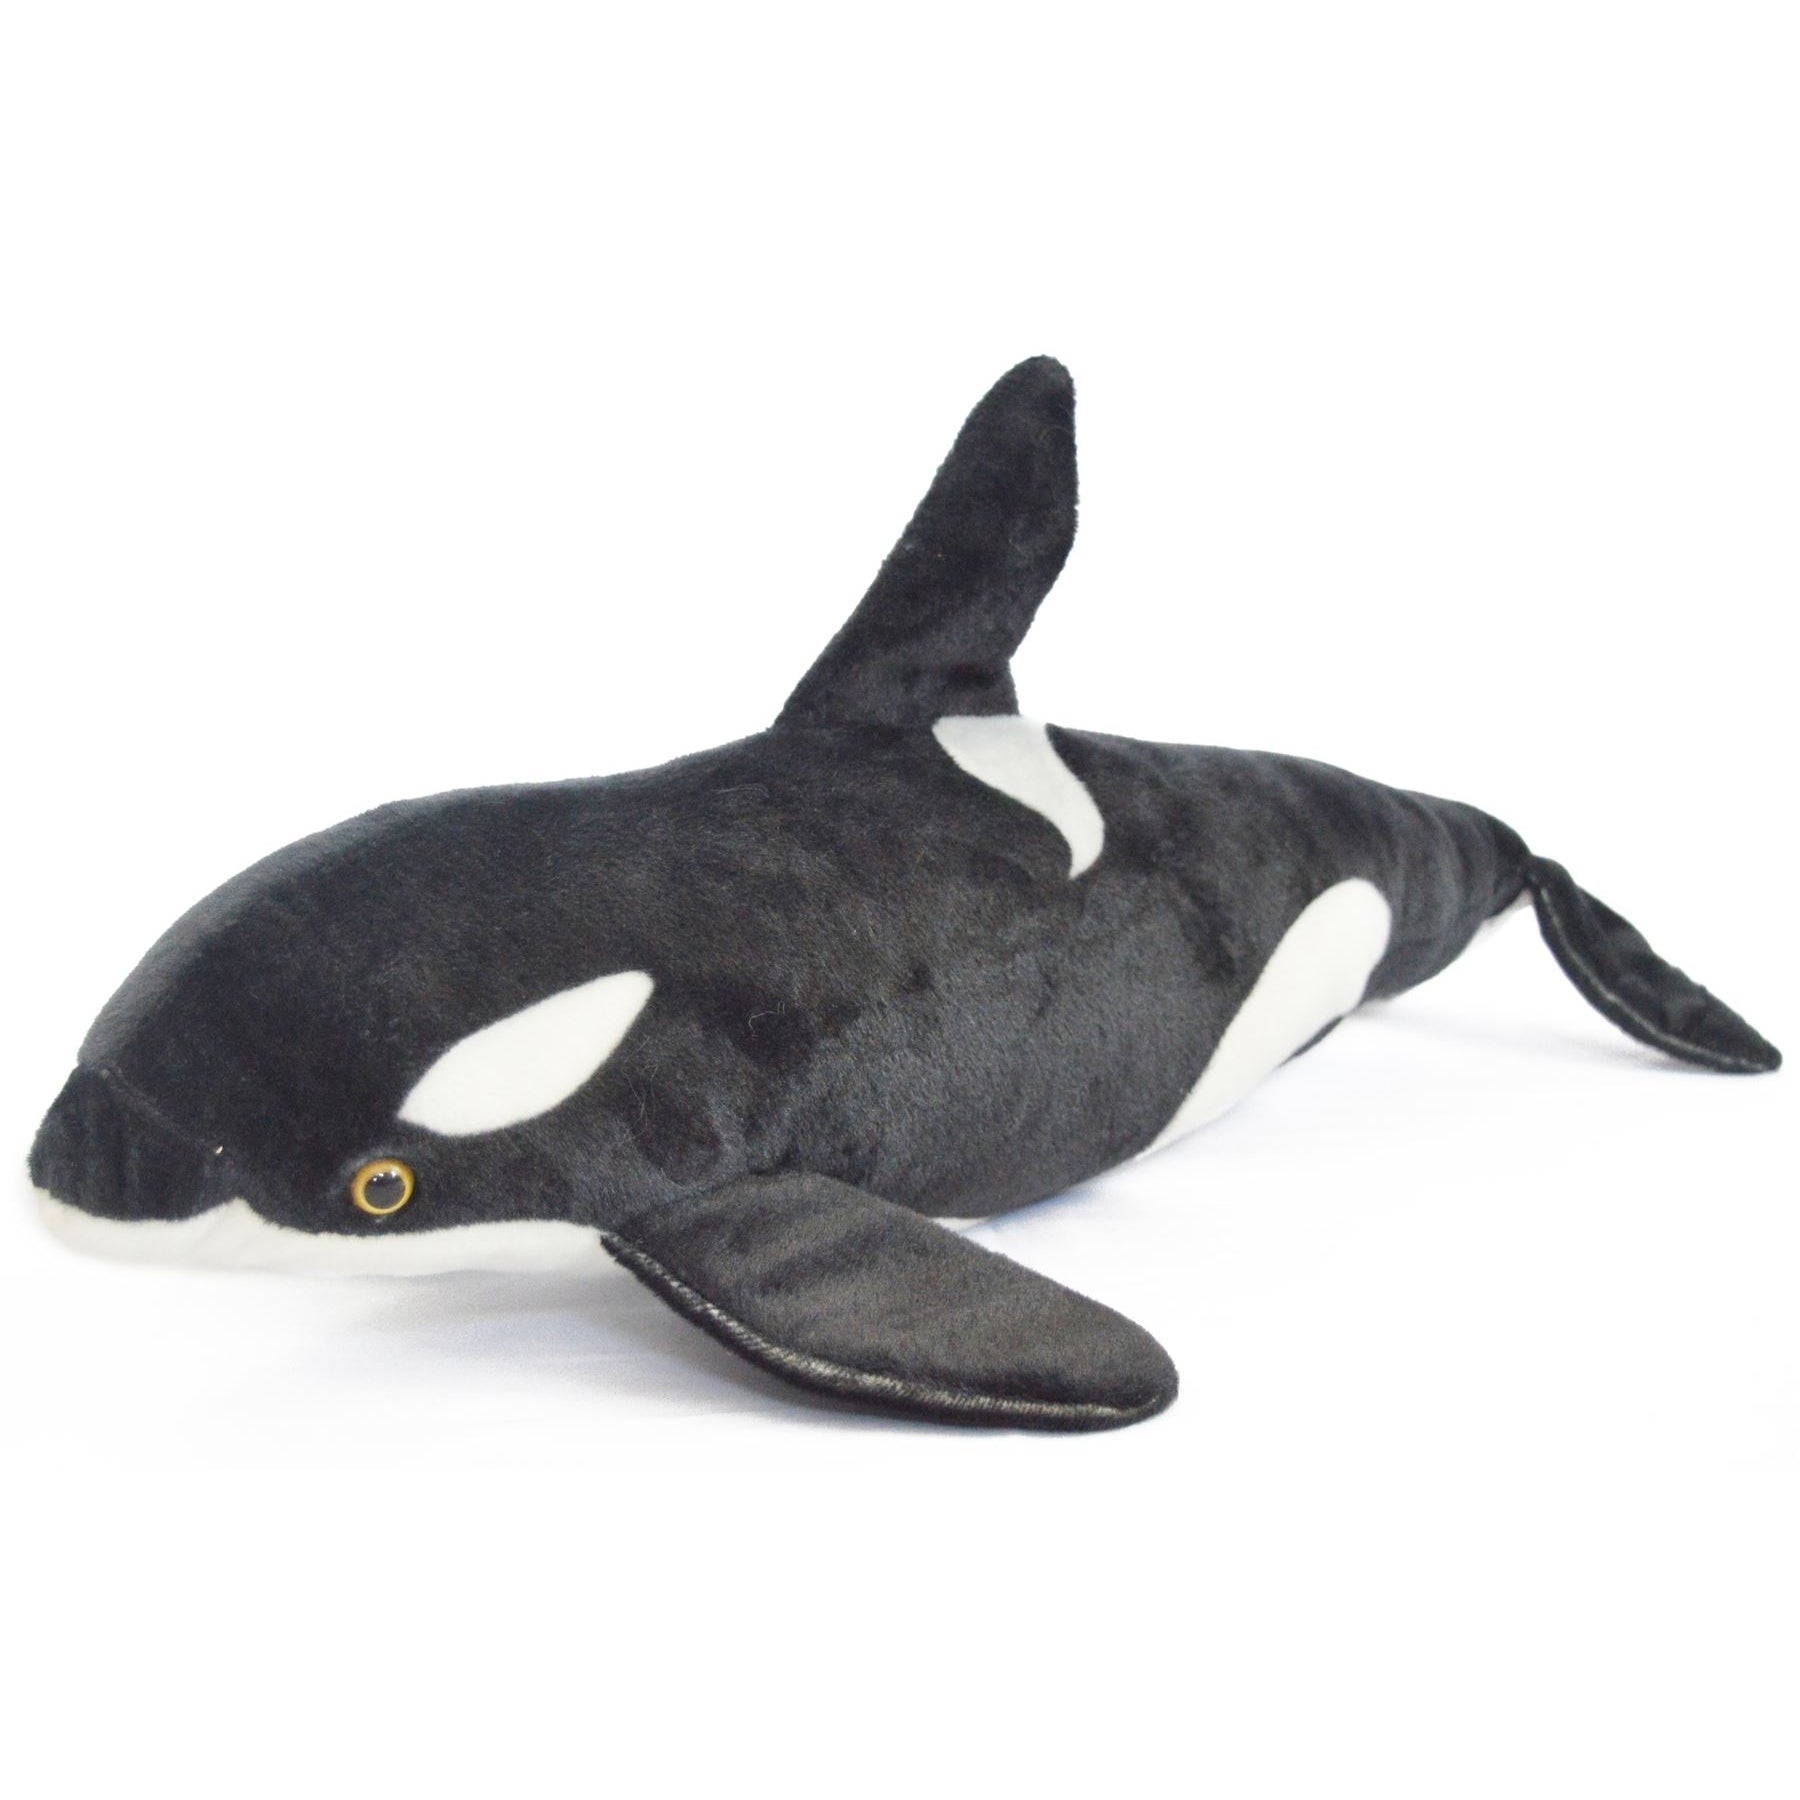 Stuffed Animal Plush - Octavius the Orca